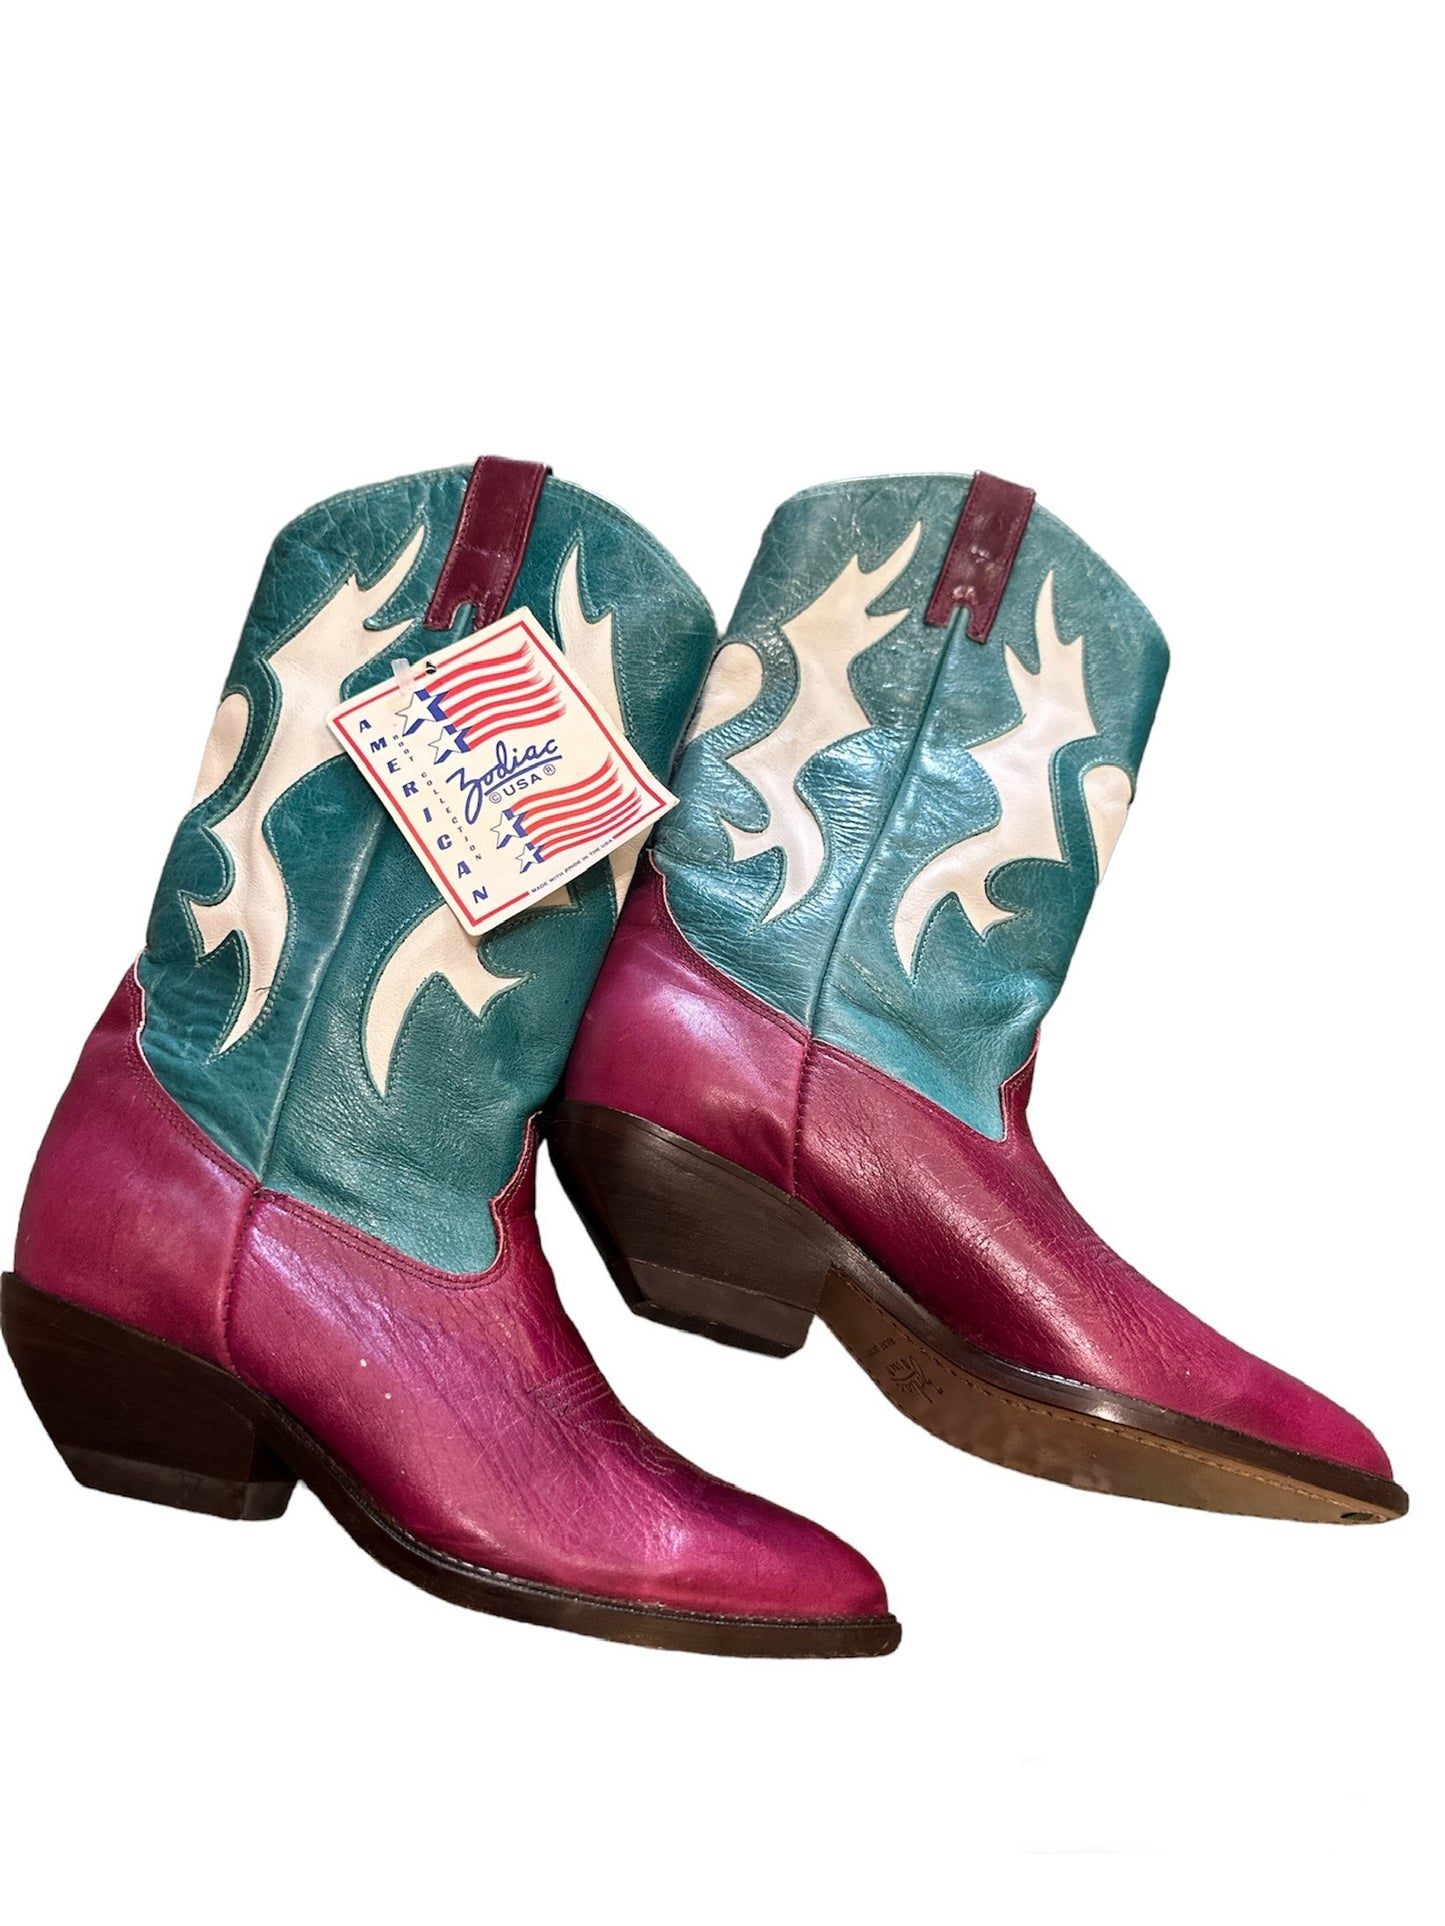 Vintage Zodiac cowboy boots 6.5